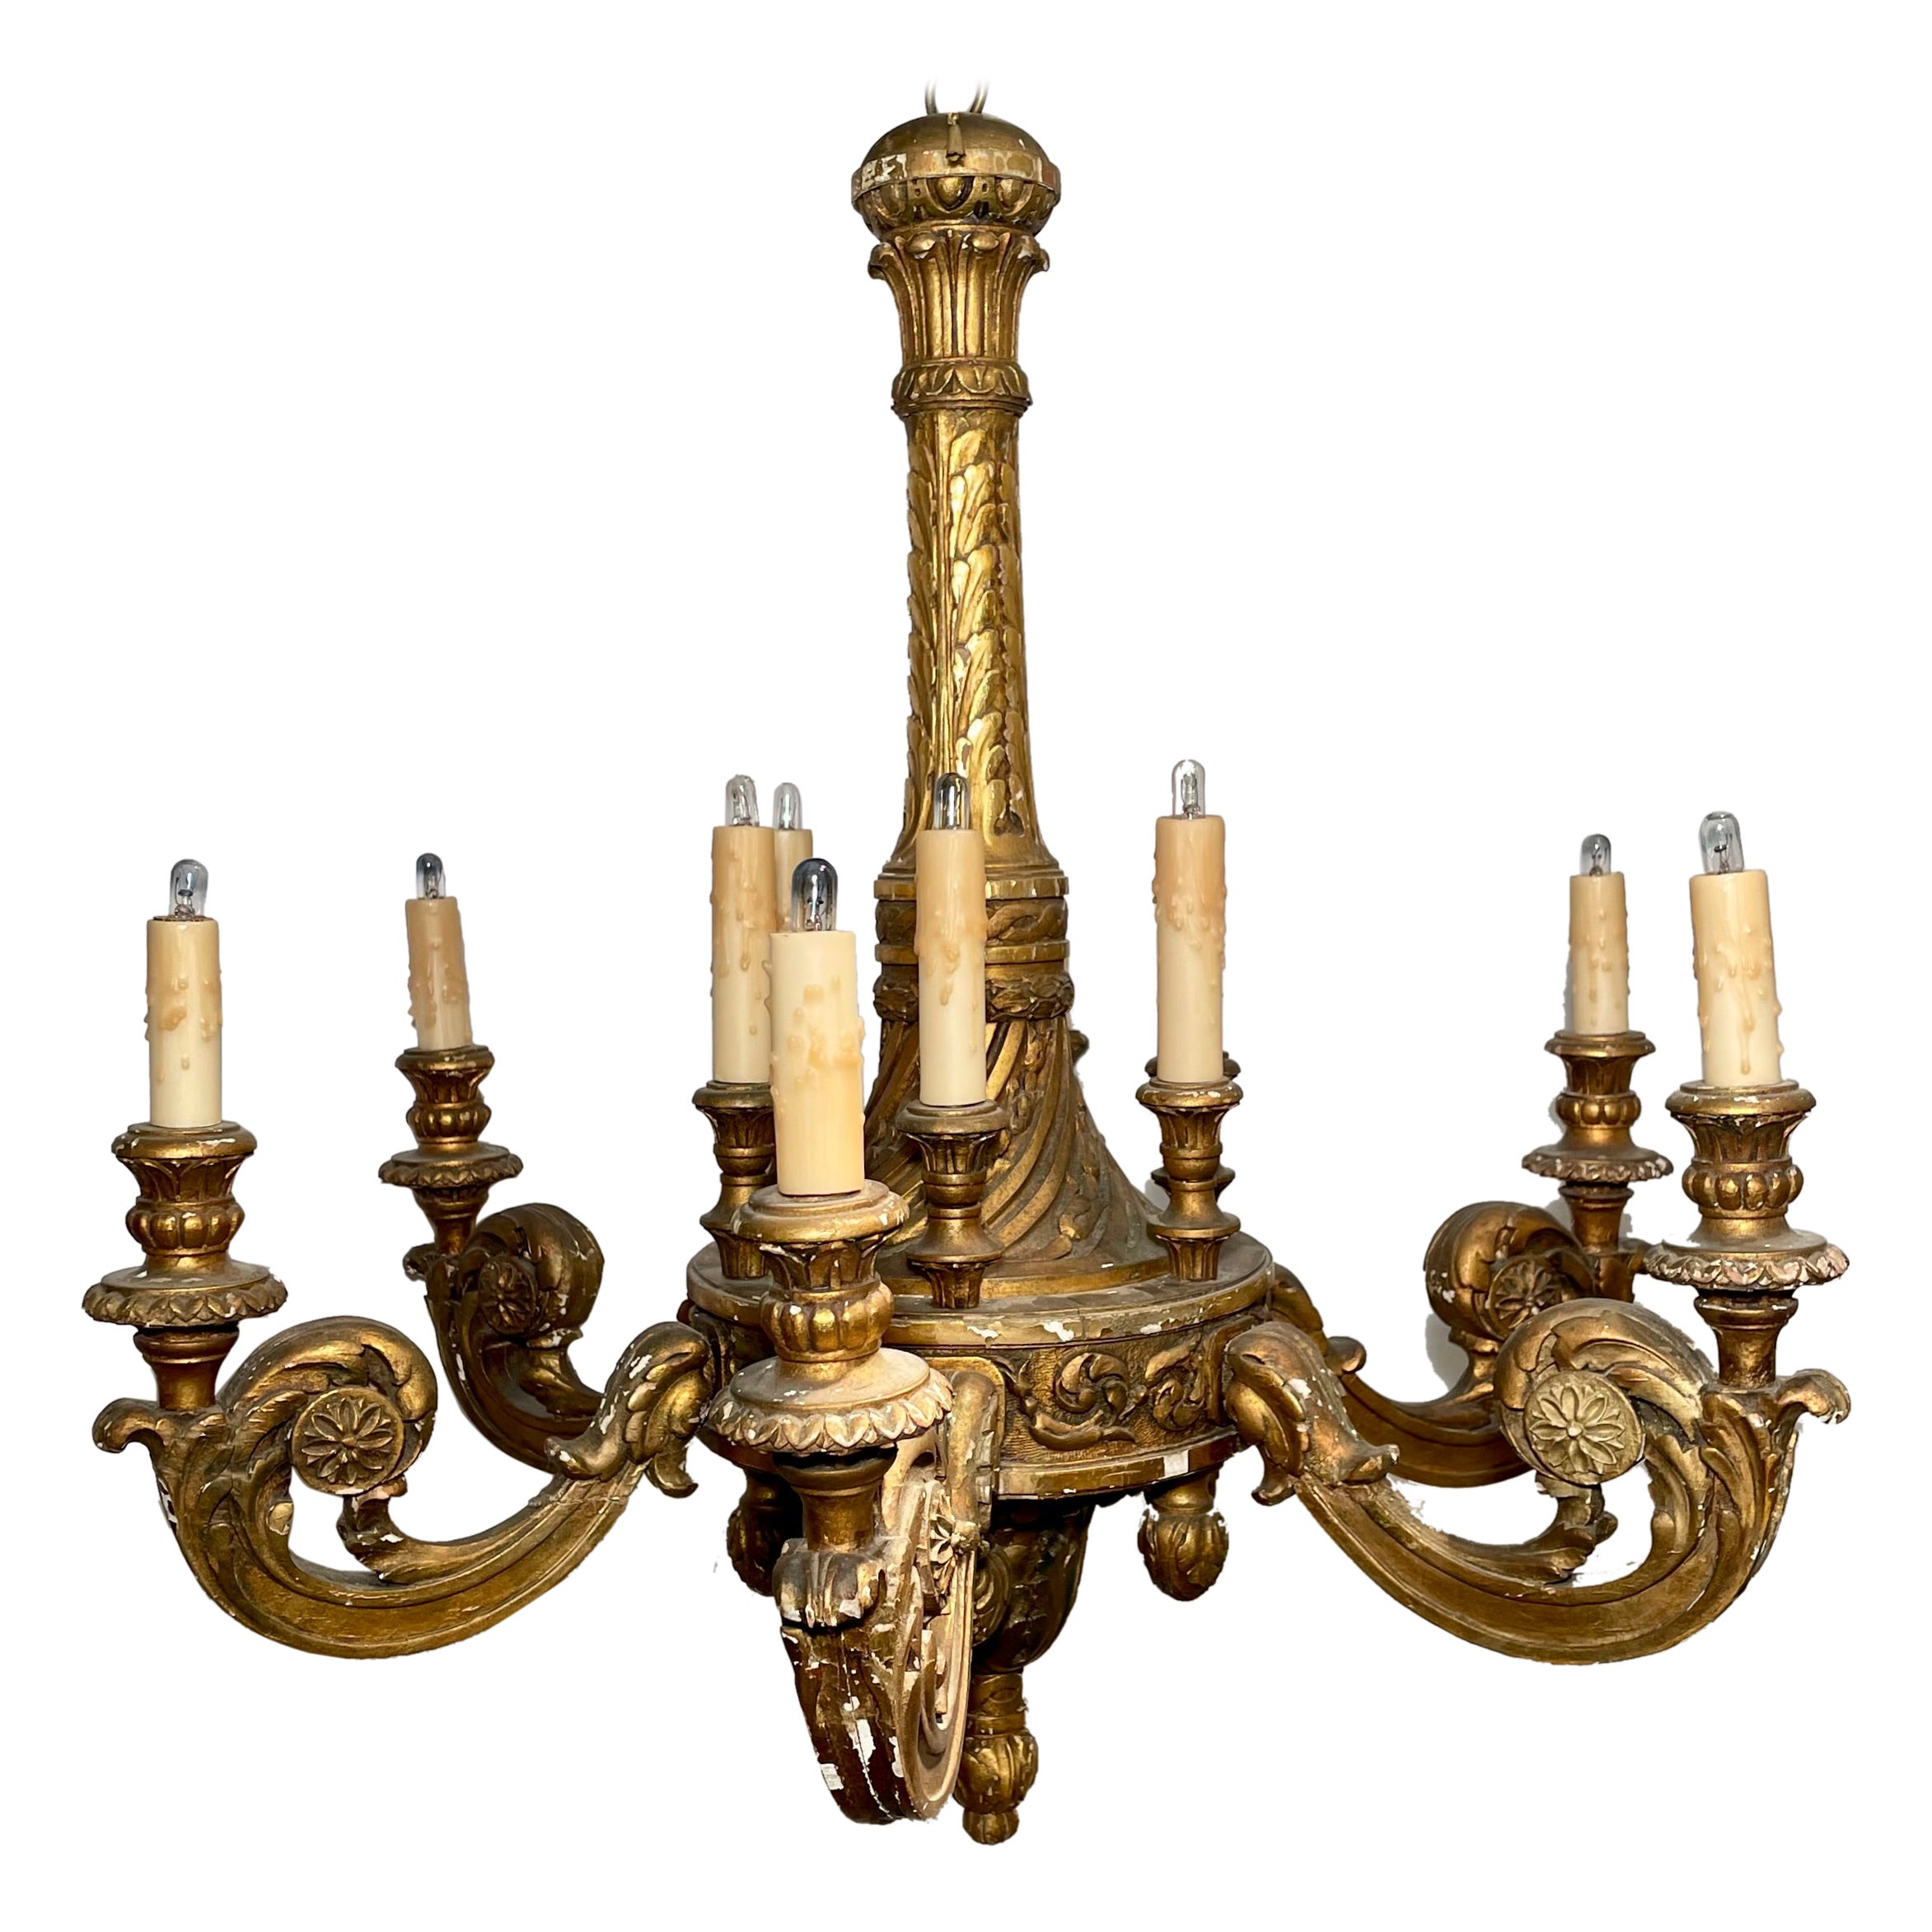 Antigua lámpara de araña "Regence" de dos pisos de madera dorada de principios del siglo XIX